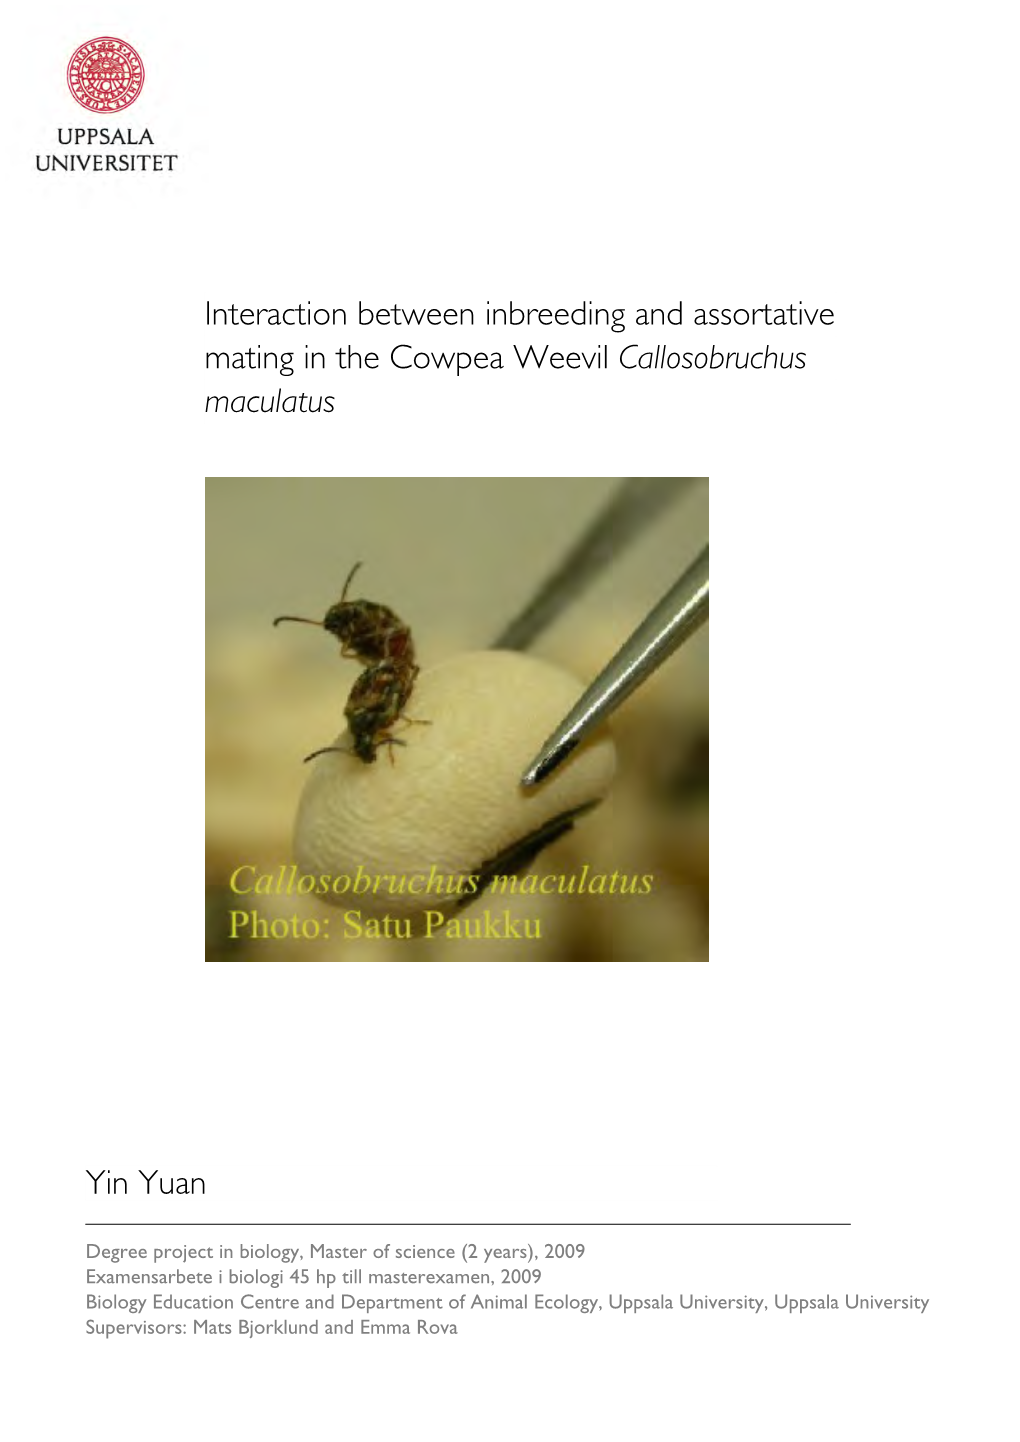 Interaction Between Inbreeding and Assortative Mating in the Cowpea Weevil Callosobruchus Maculatus